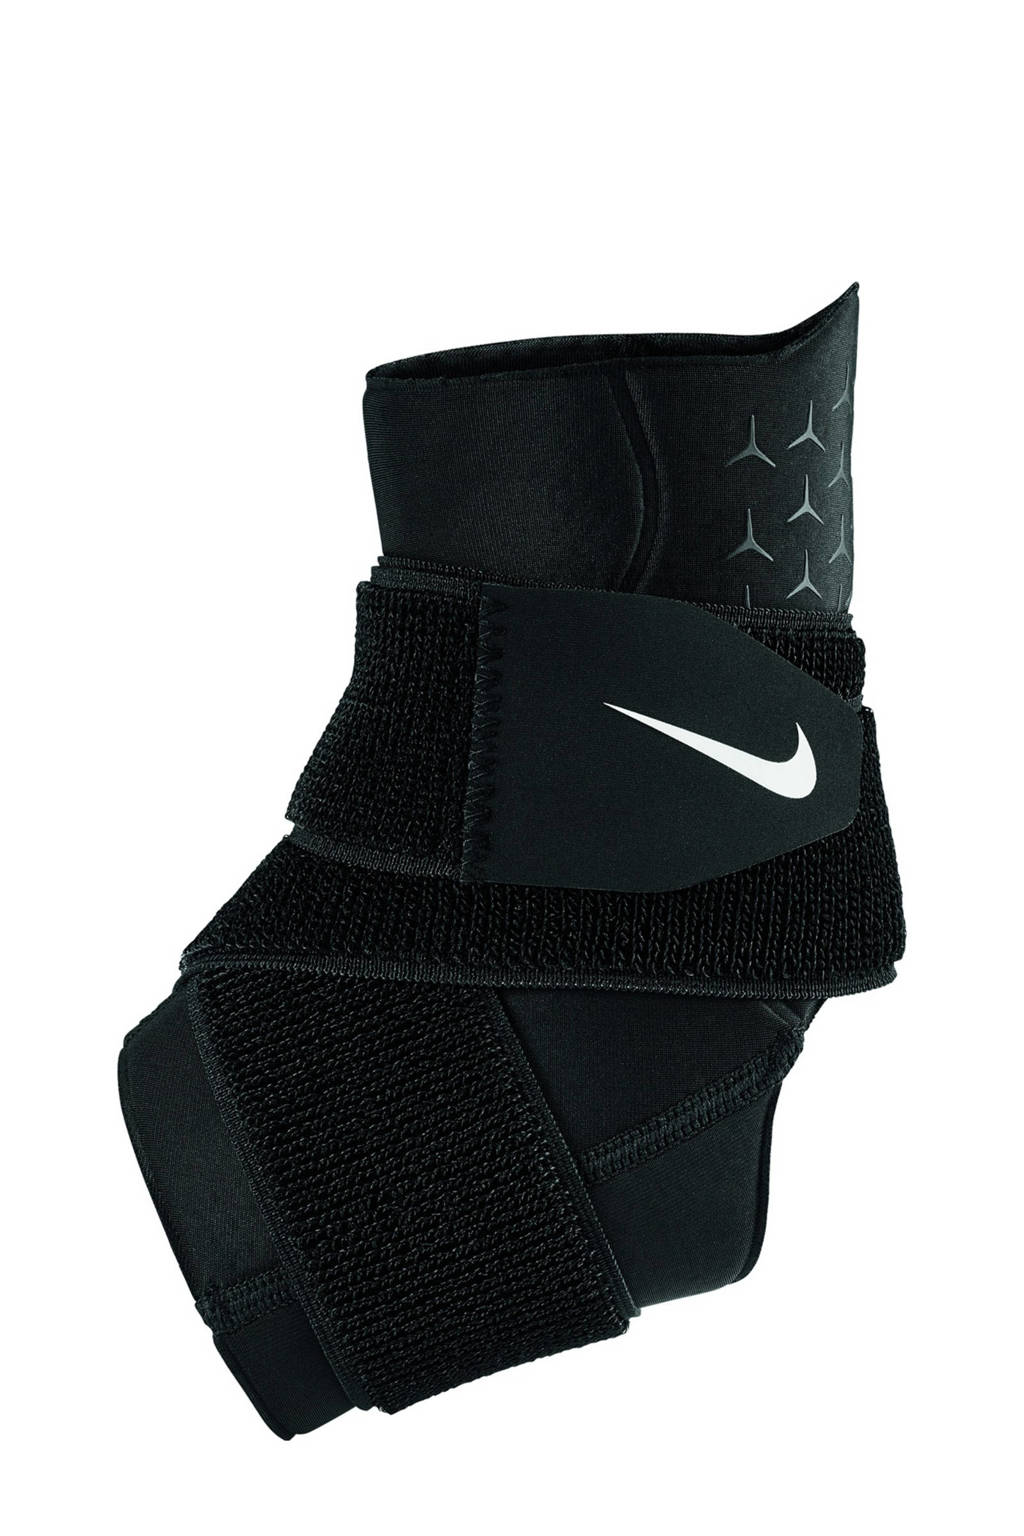 Nike enkelbeschermer zwart